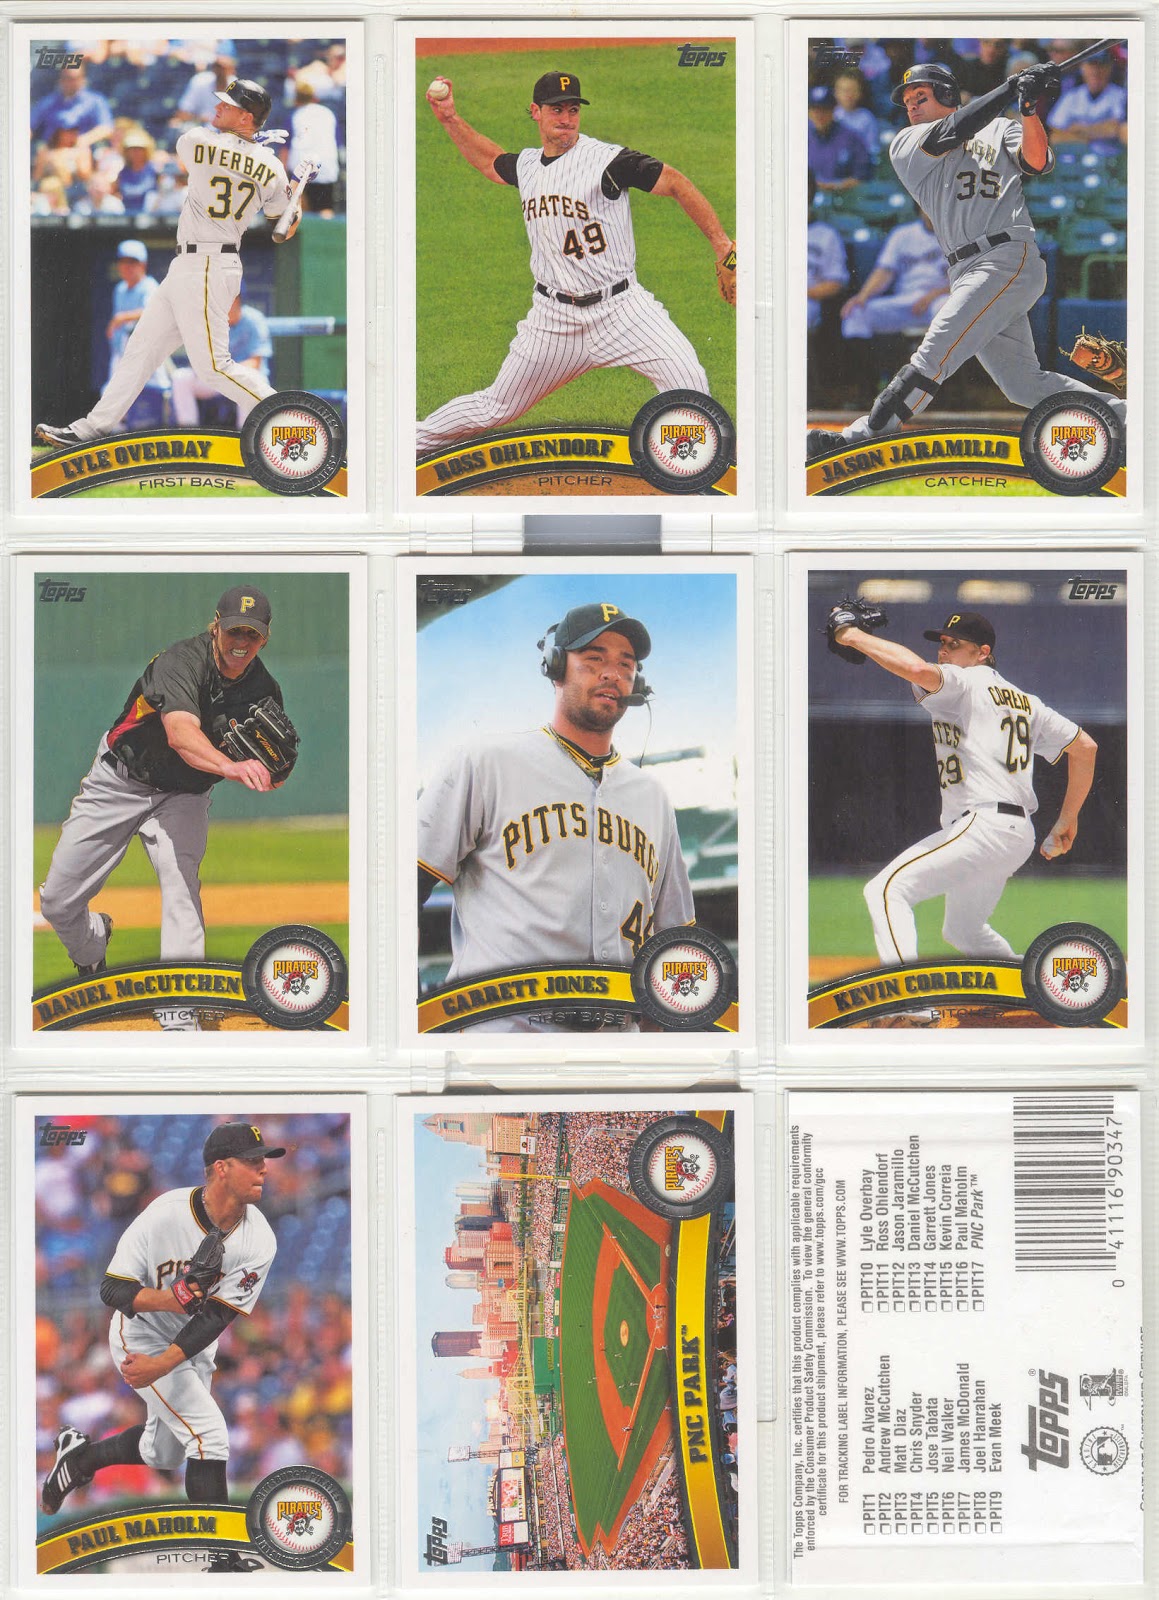 bdj610's Topps Baseball Card Blog: Random Topps Team Set of the Week: 2011 Pittsburgh ...1159 x 1600